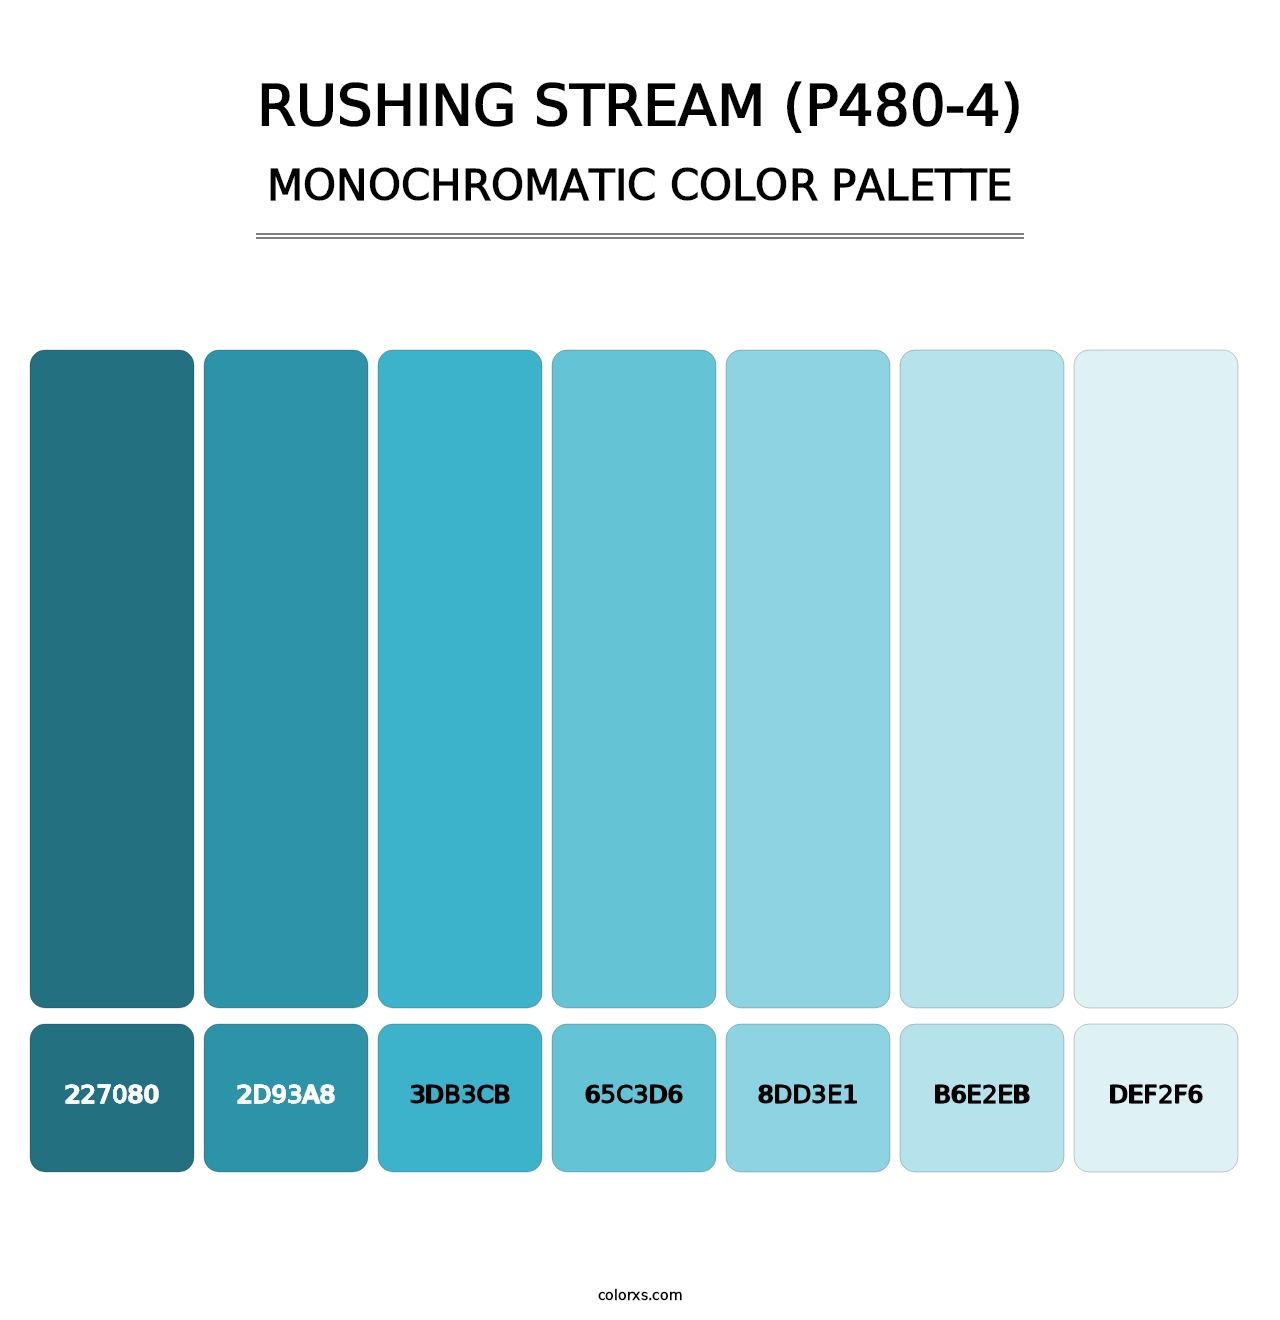 Rushing Stream (P480-4) - Monochromatic Color Palette